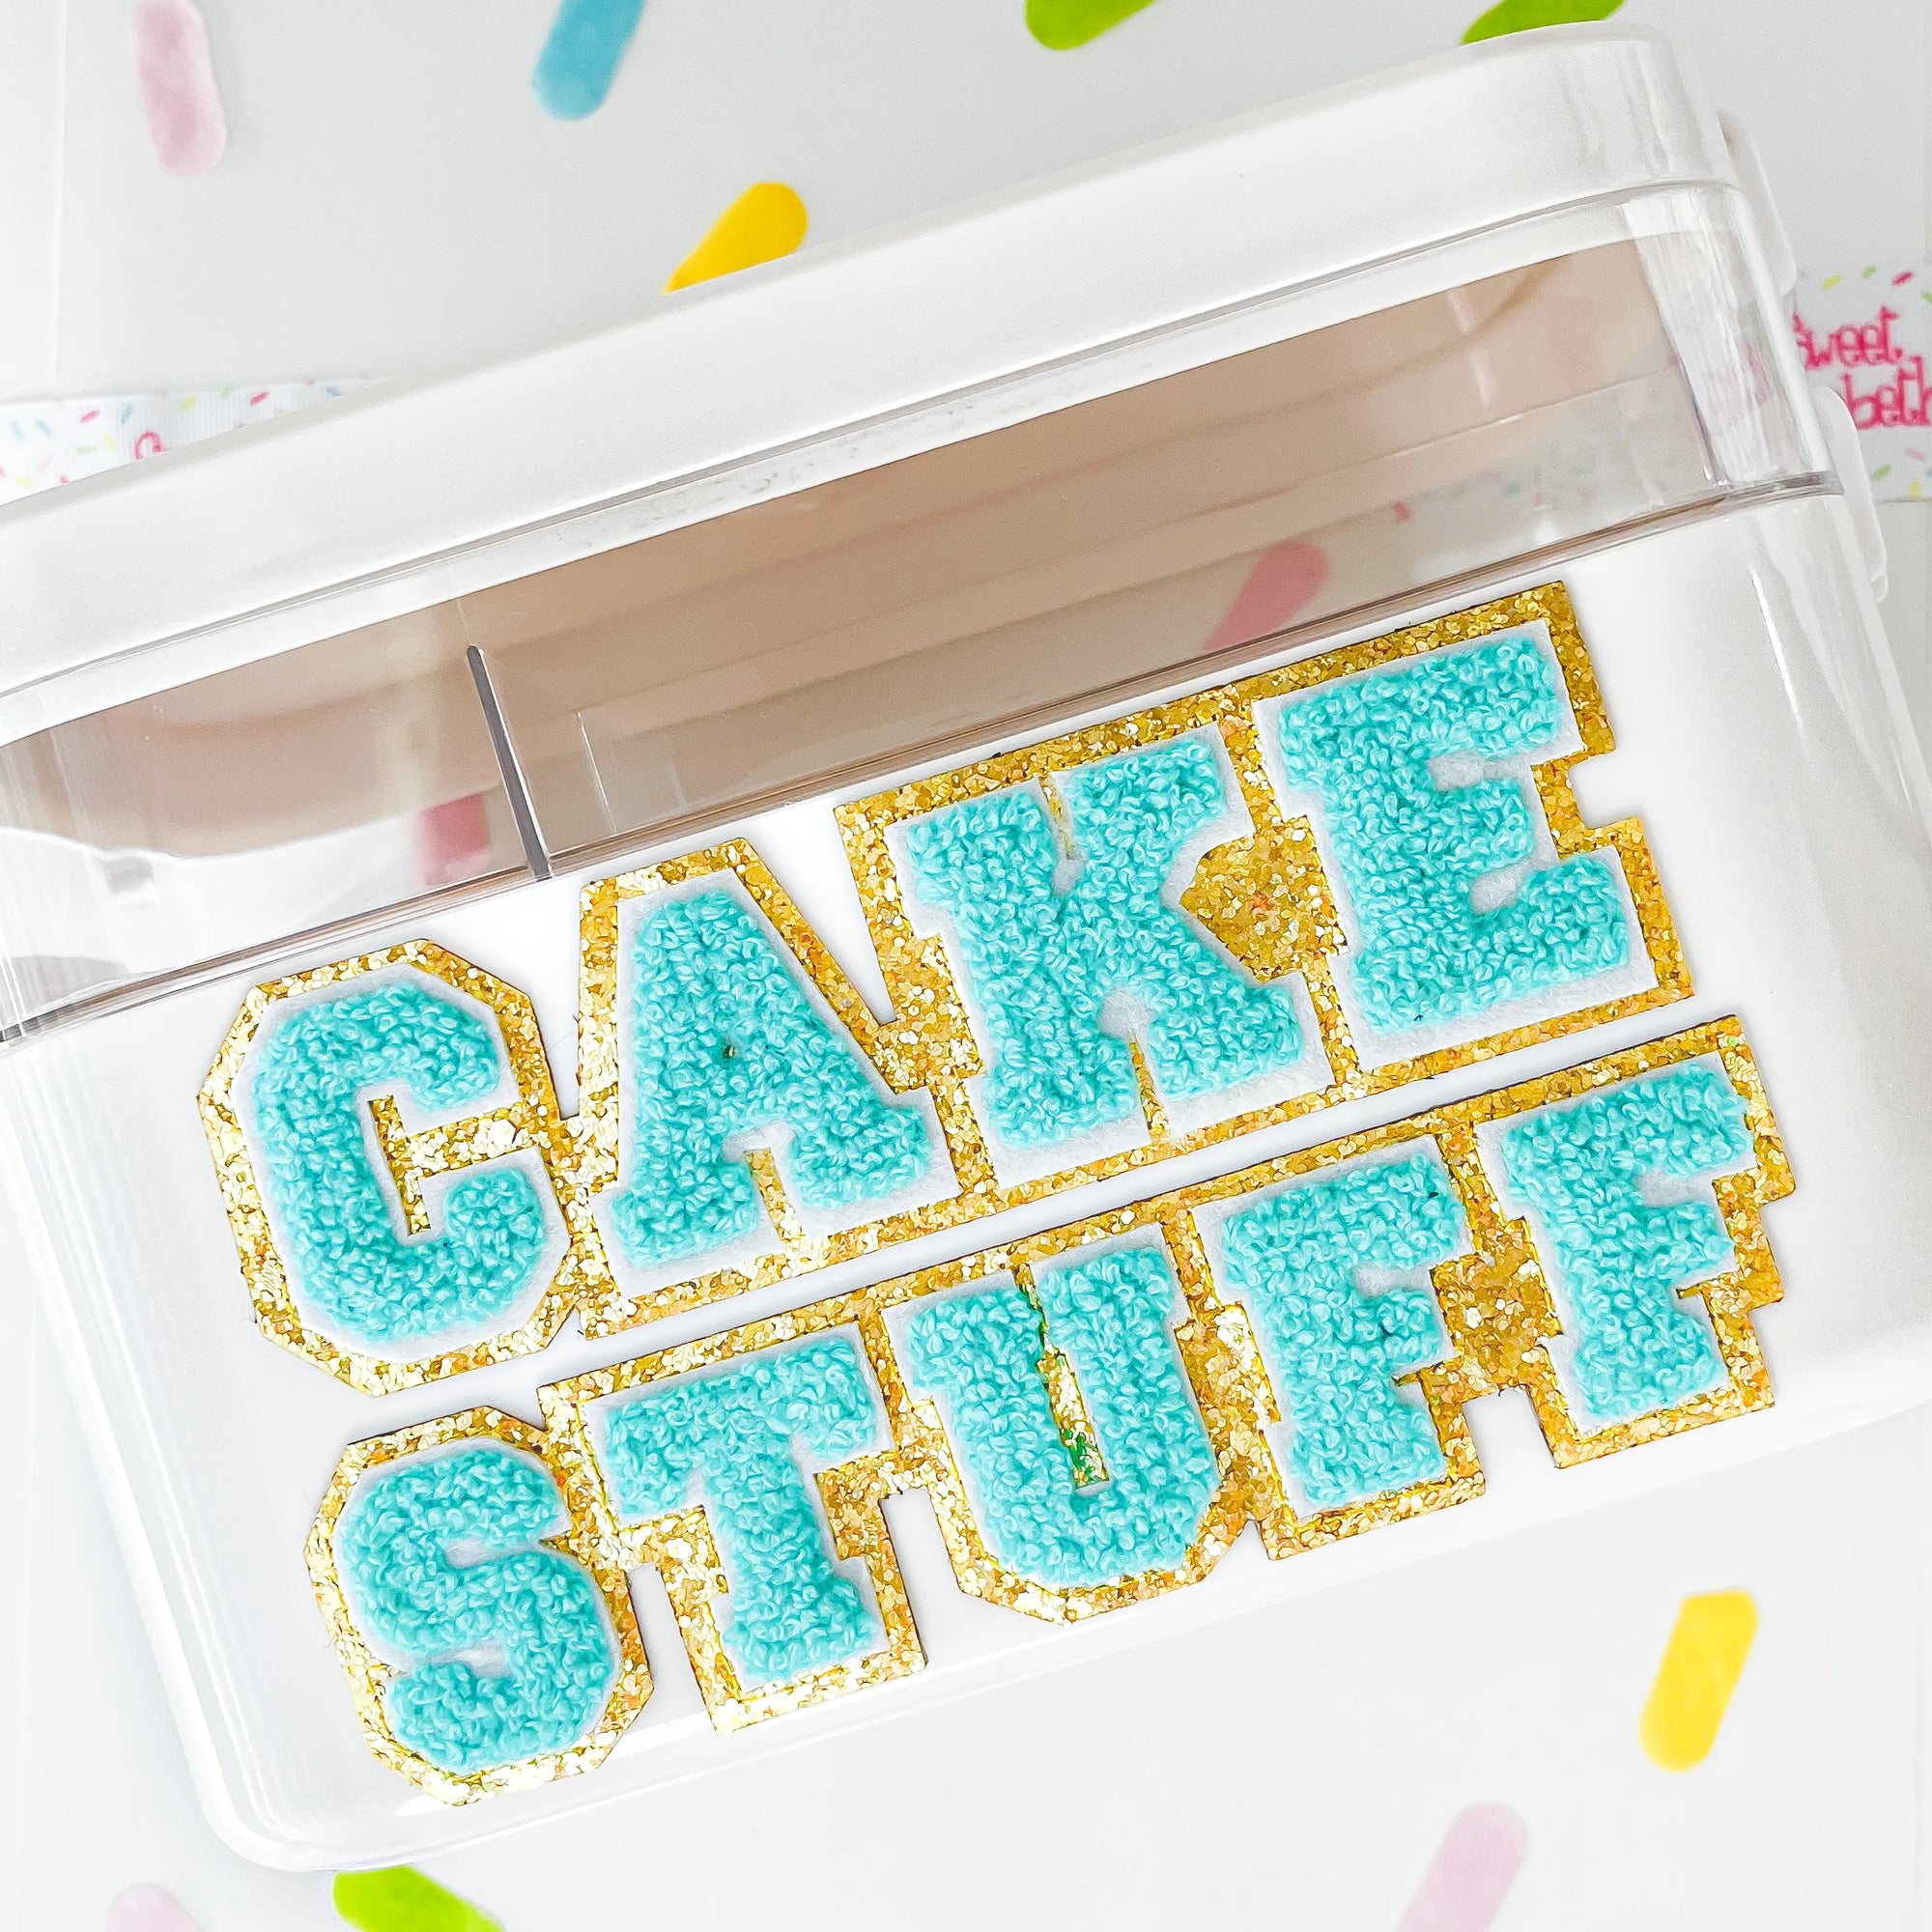 CAKE STUFF Glitter Storage Box Teal By Sweet Elizabeth